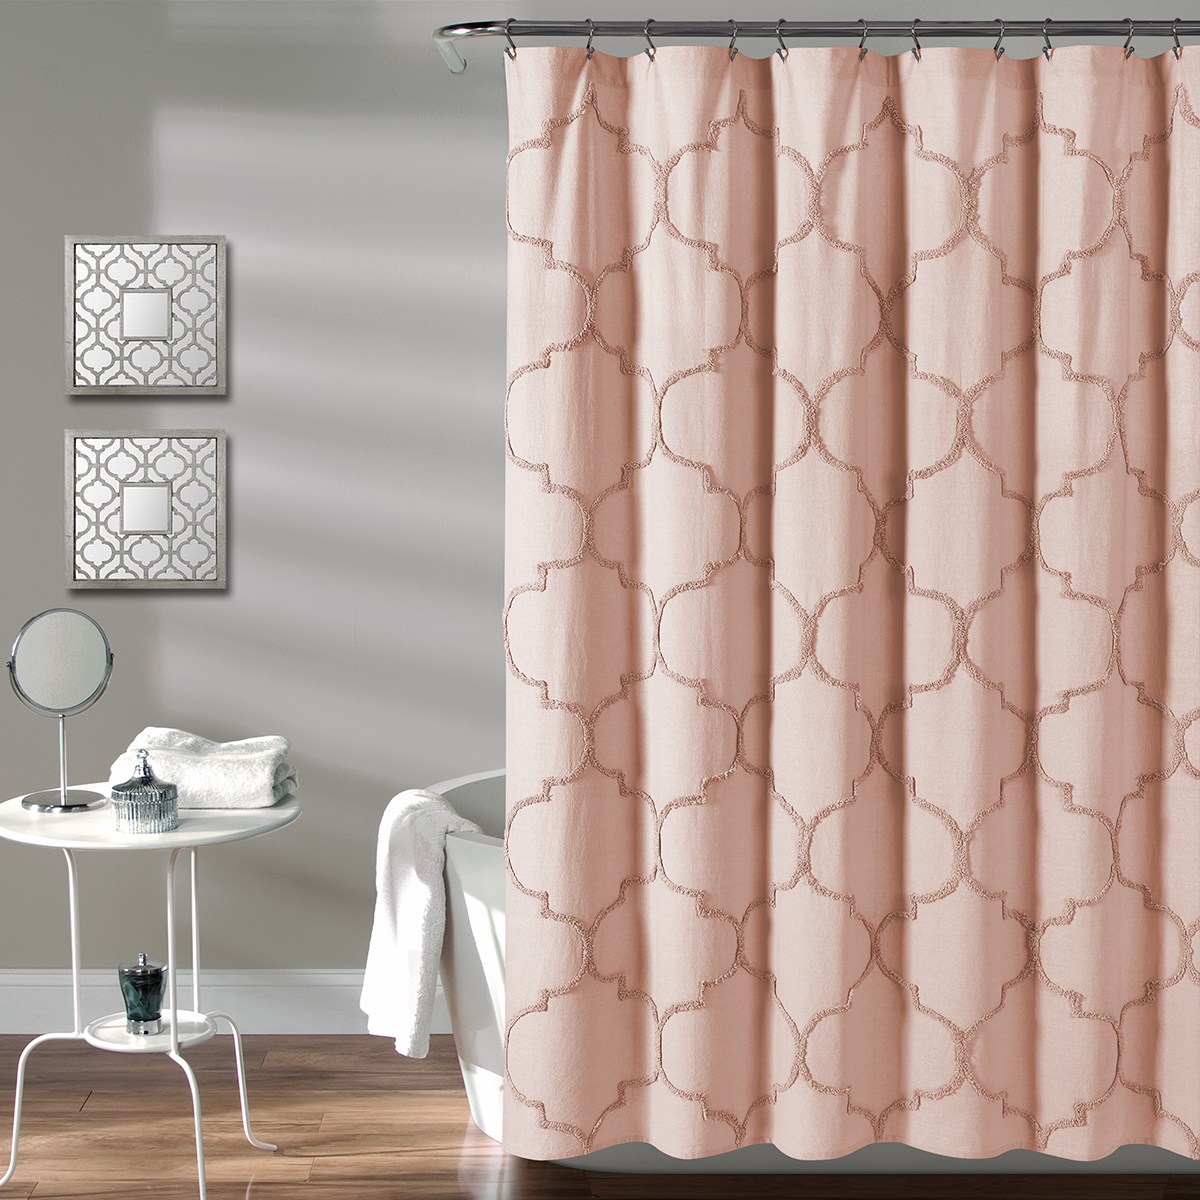 Lush Decor(R) Avon Chenille Trellis Shower Curtain